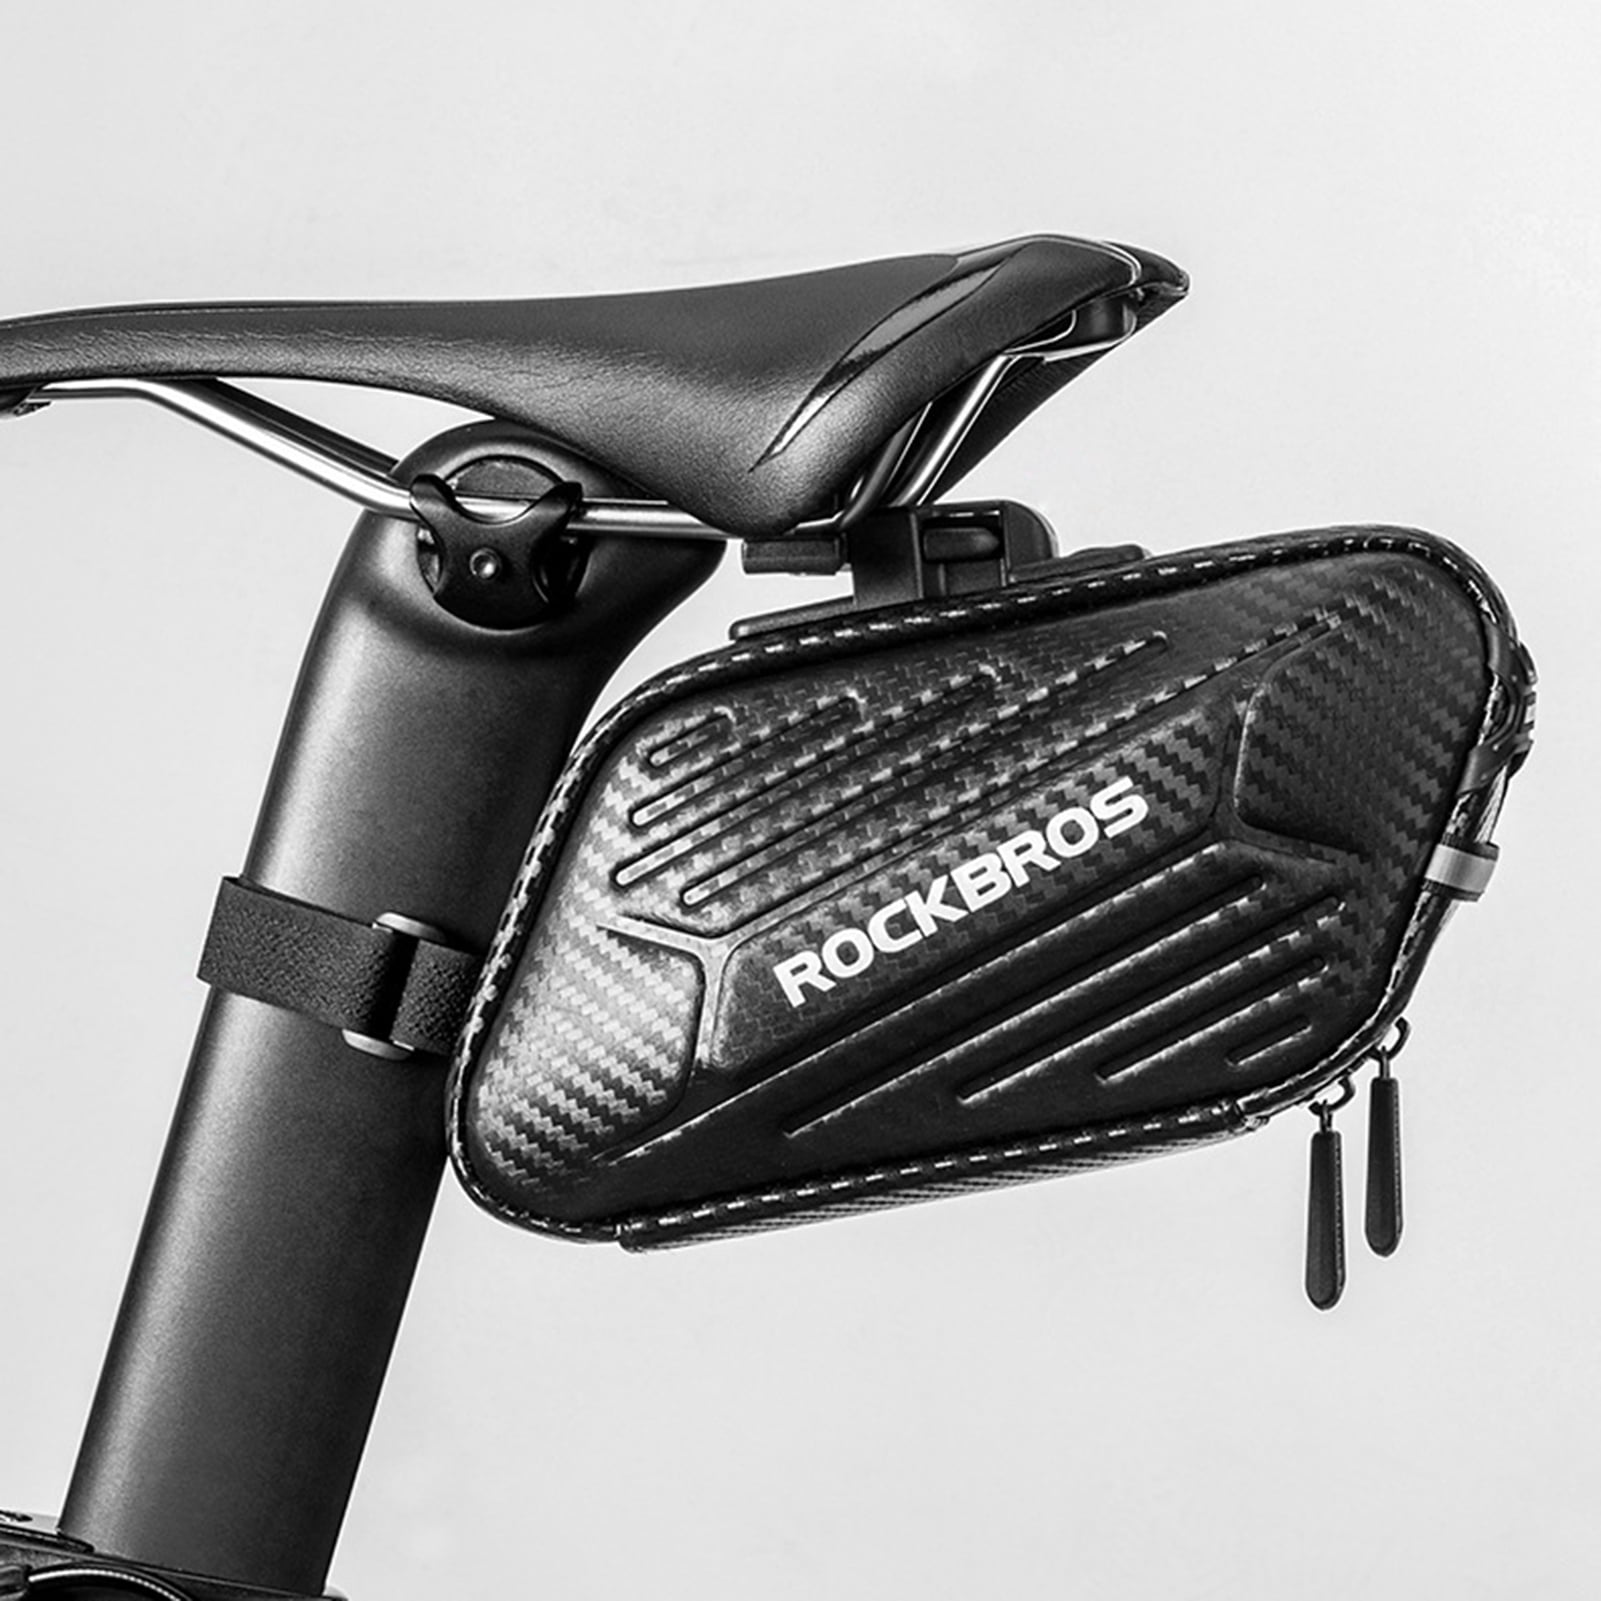 RockBros Cycling Bicycle Saddle Bag Pannier MTB Road Bike Seat Bag Tail Storage 